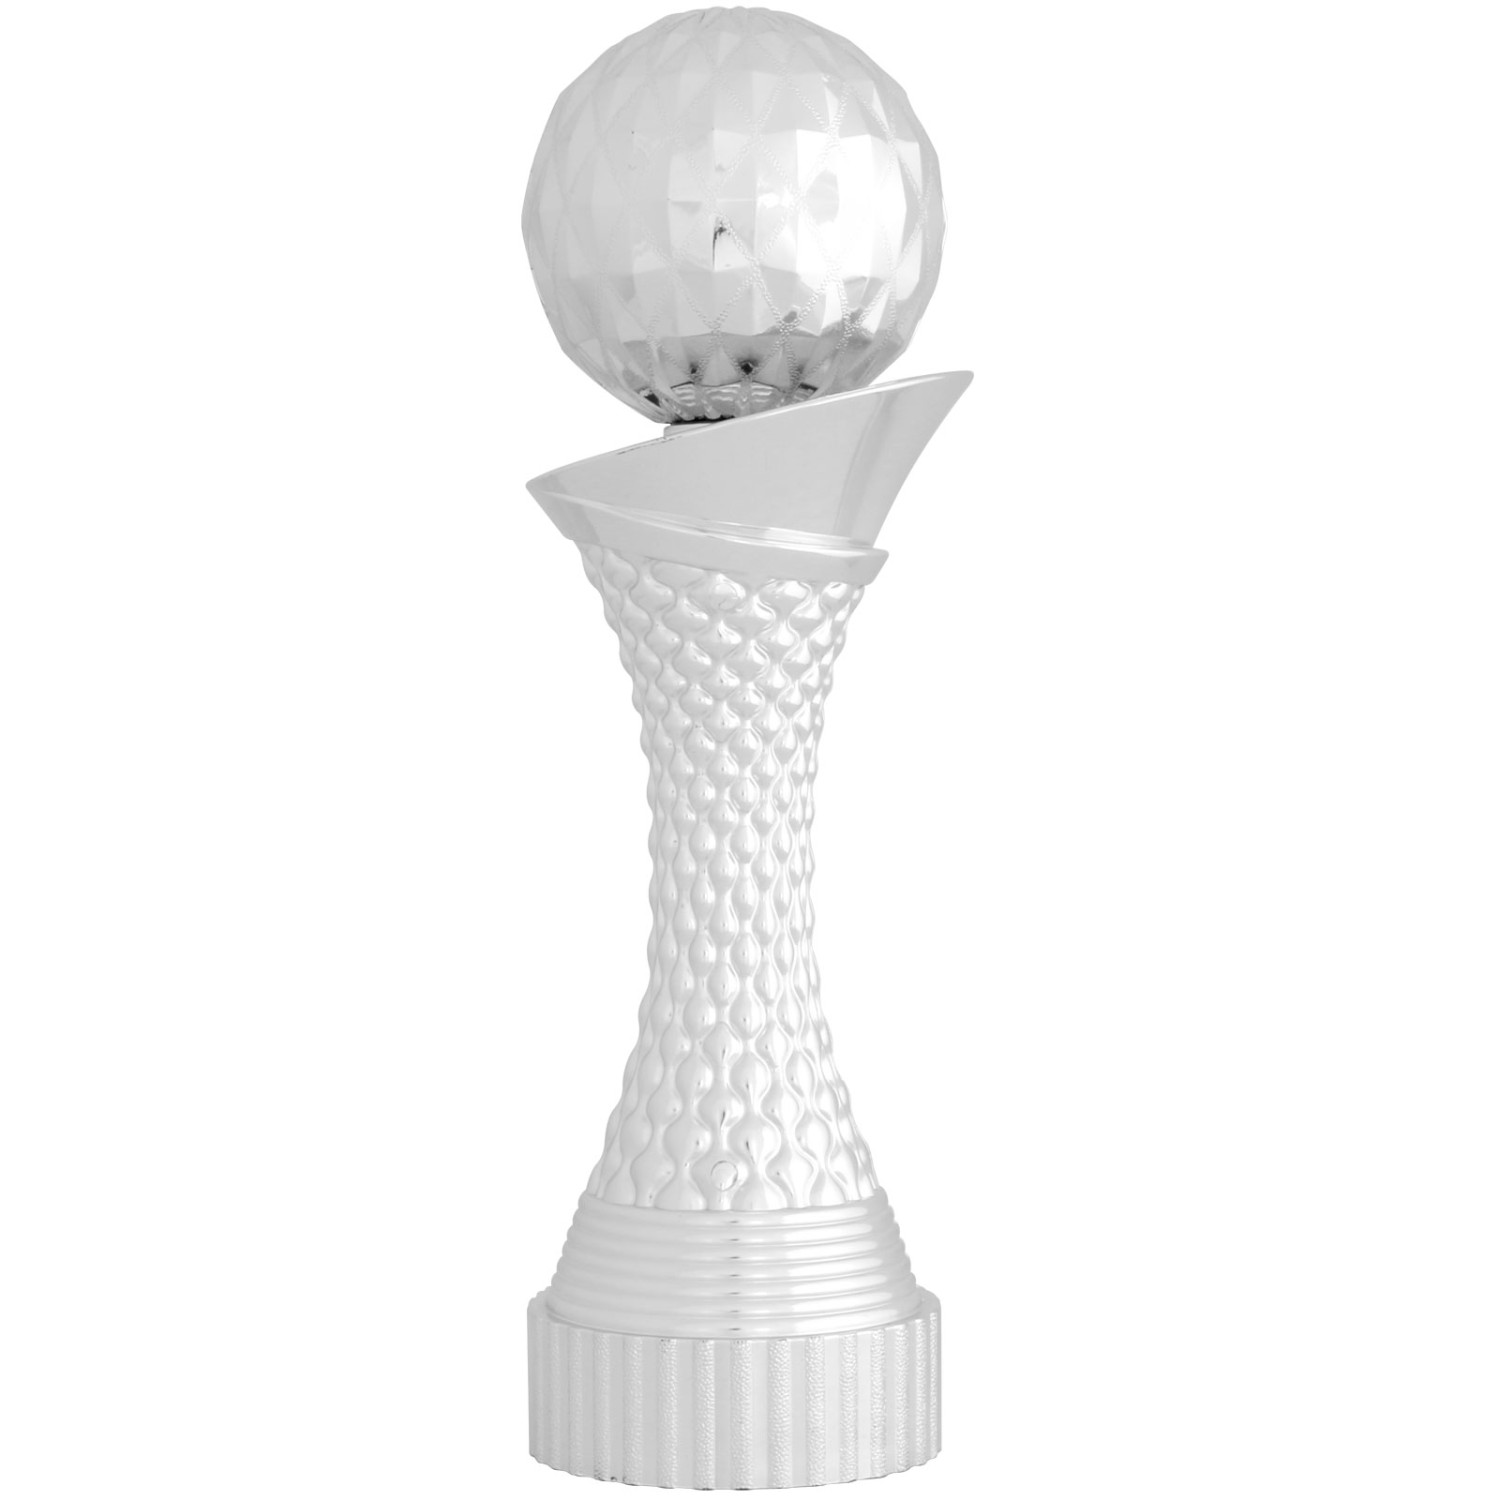 1. Foto Golf Pokal AVORD Golfpokal silber mit Gravur (Größe: L 27cm hoch)